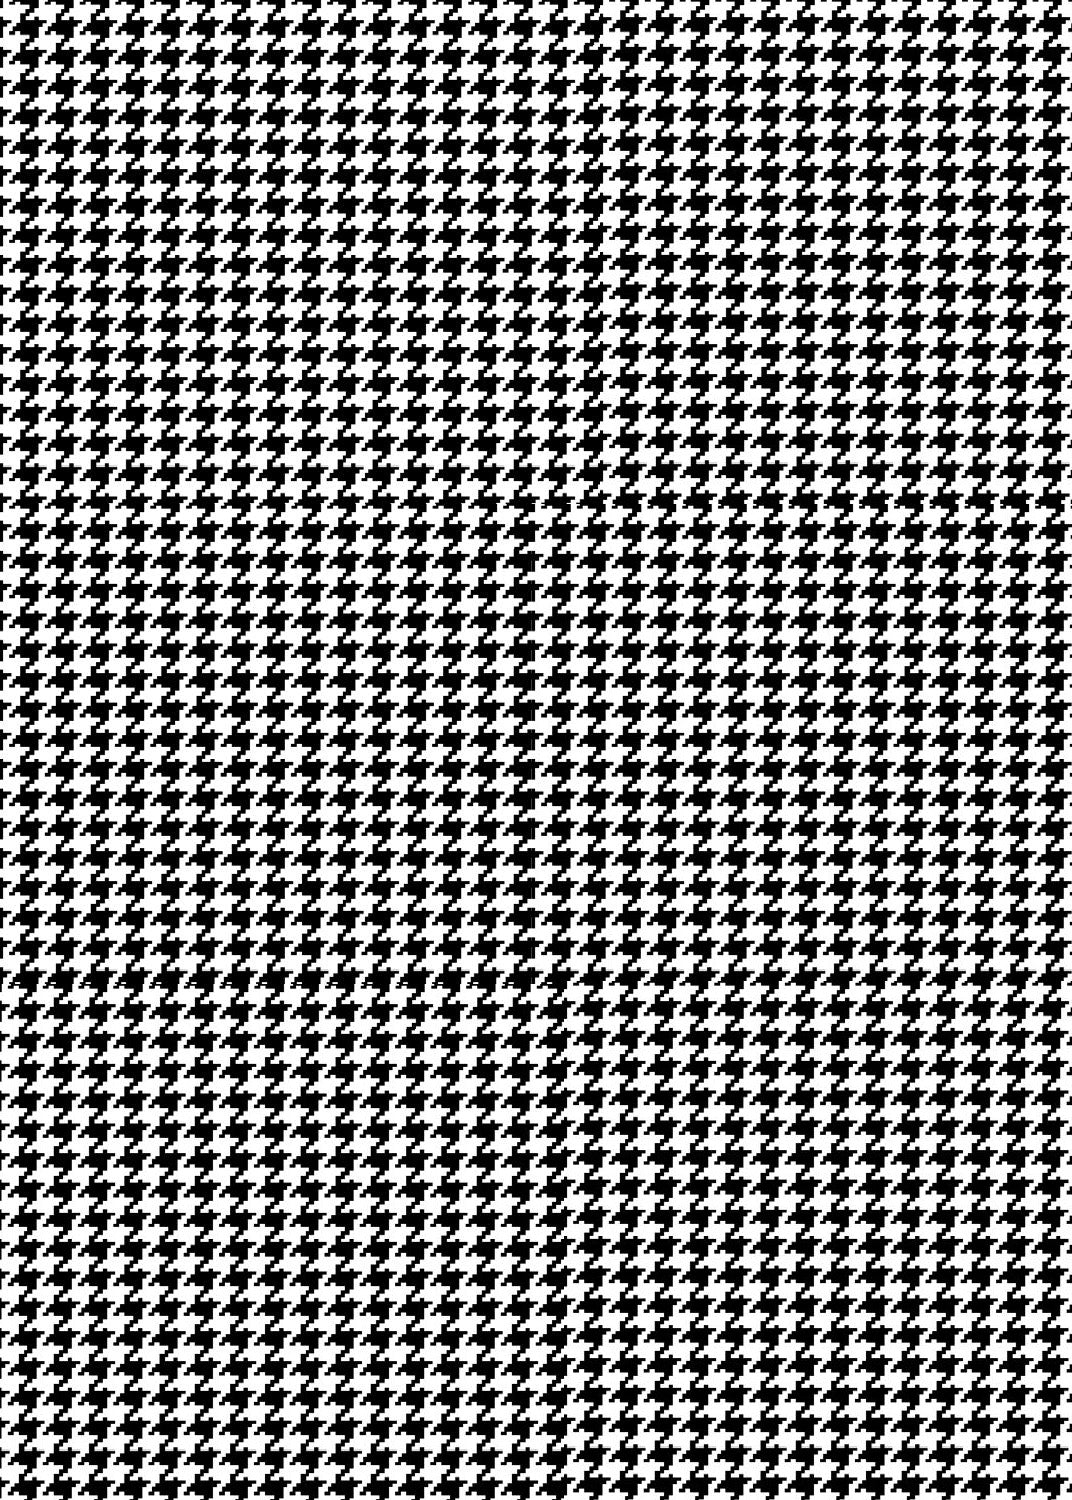 houndstooth-black-white-1072x1500_9b9ec057-01bc-4363-8c0c-c890a900f516.jpg